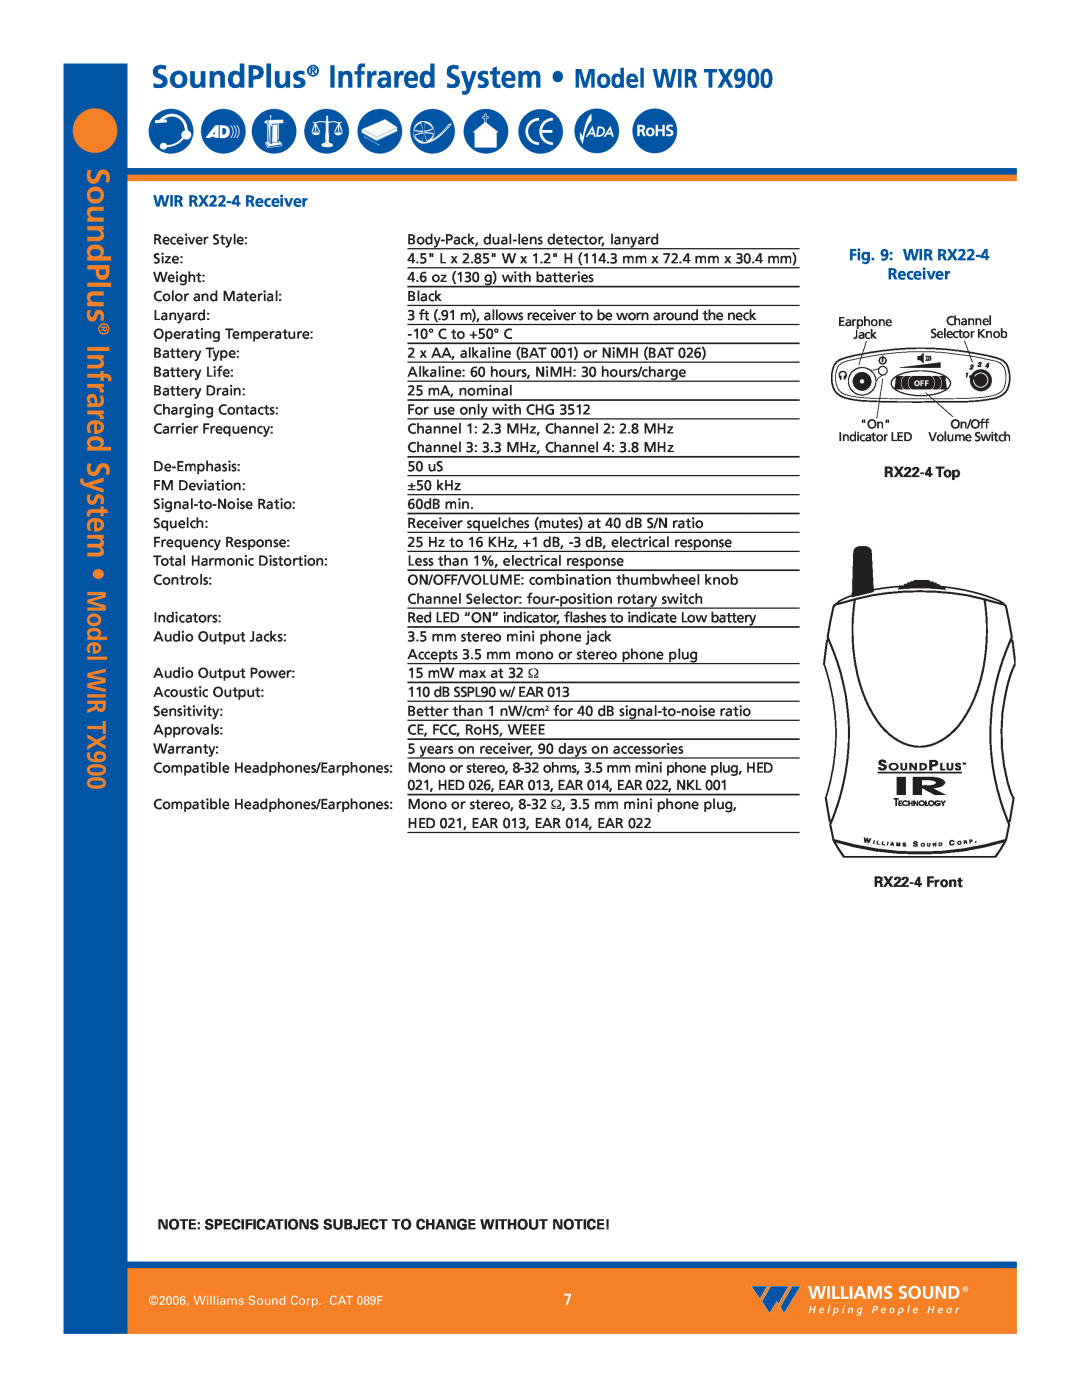 Williams Sound WIRTX900 specifications SoundPlus Infrared System Model WIR TX900, WIR RX22-4 Receiver, RX22-4 Top 